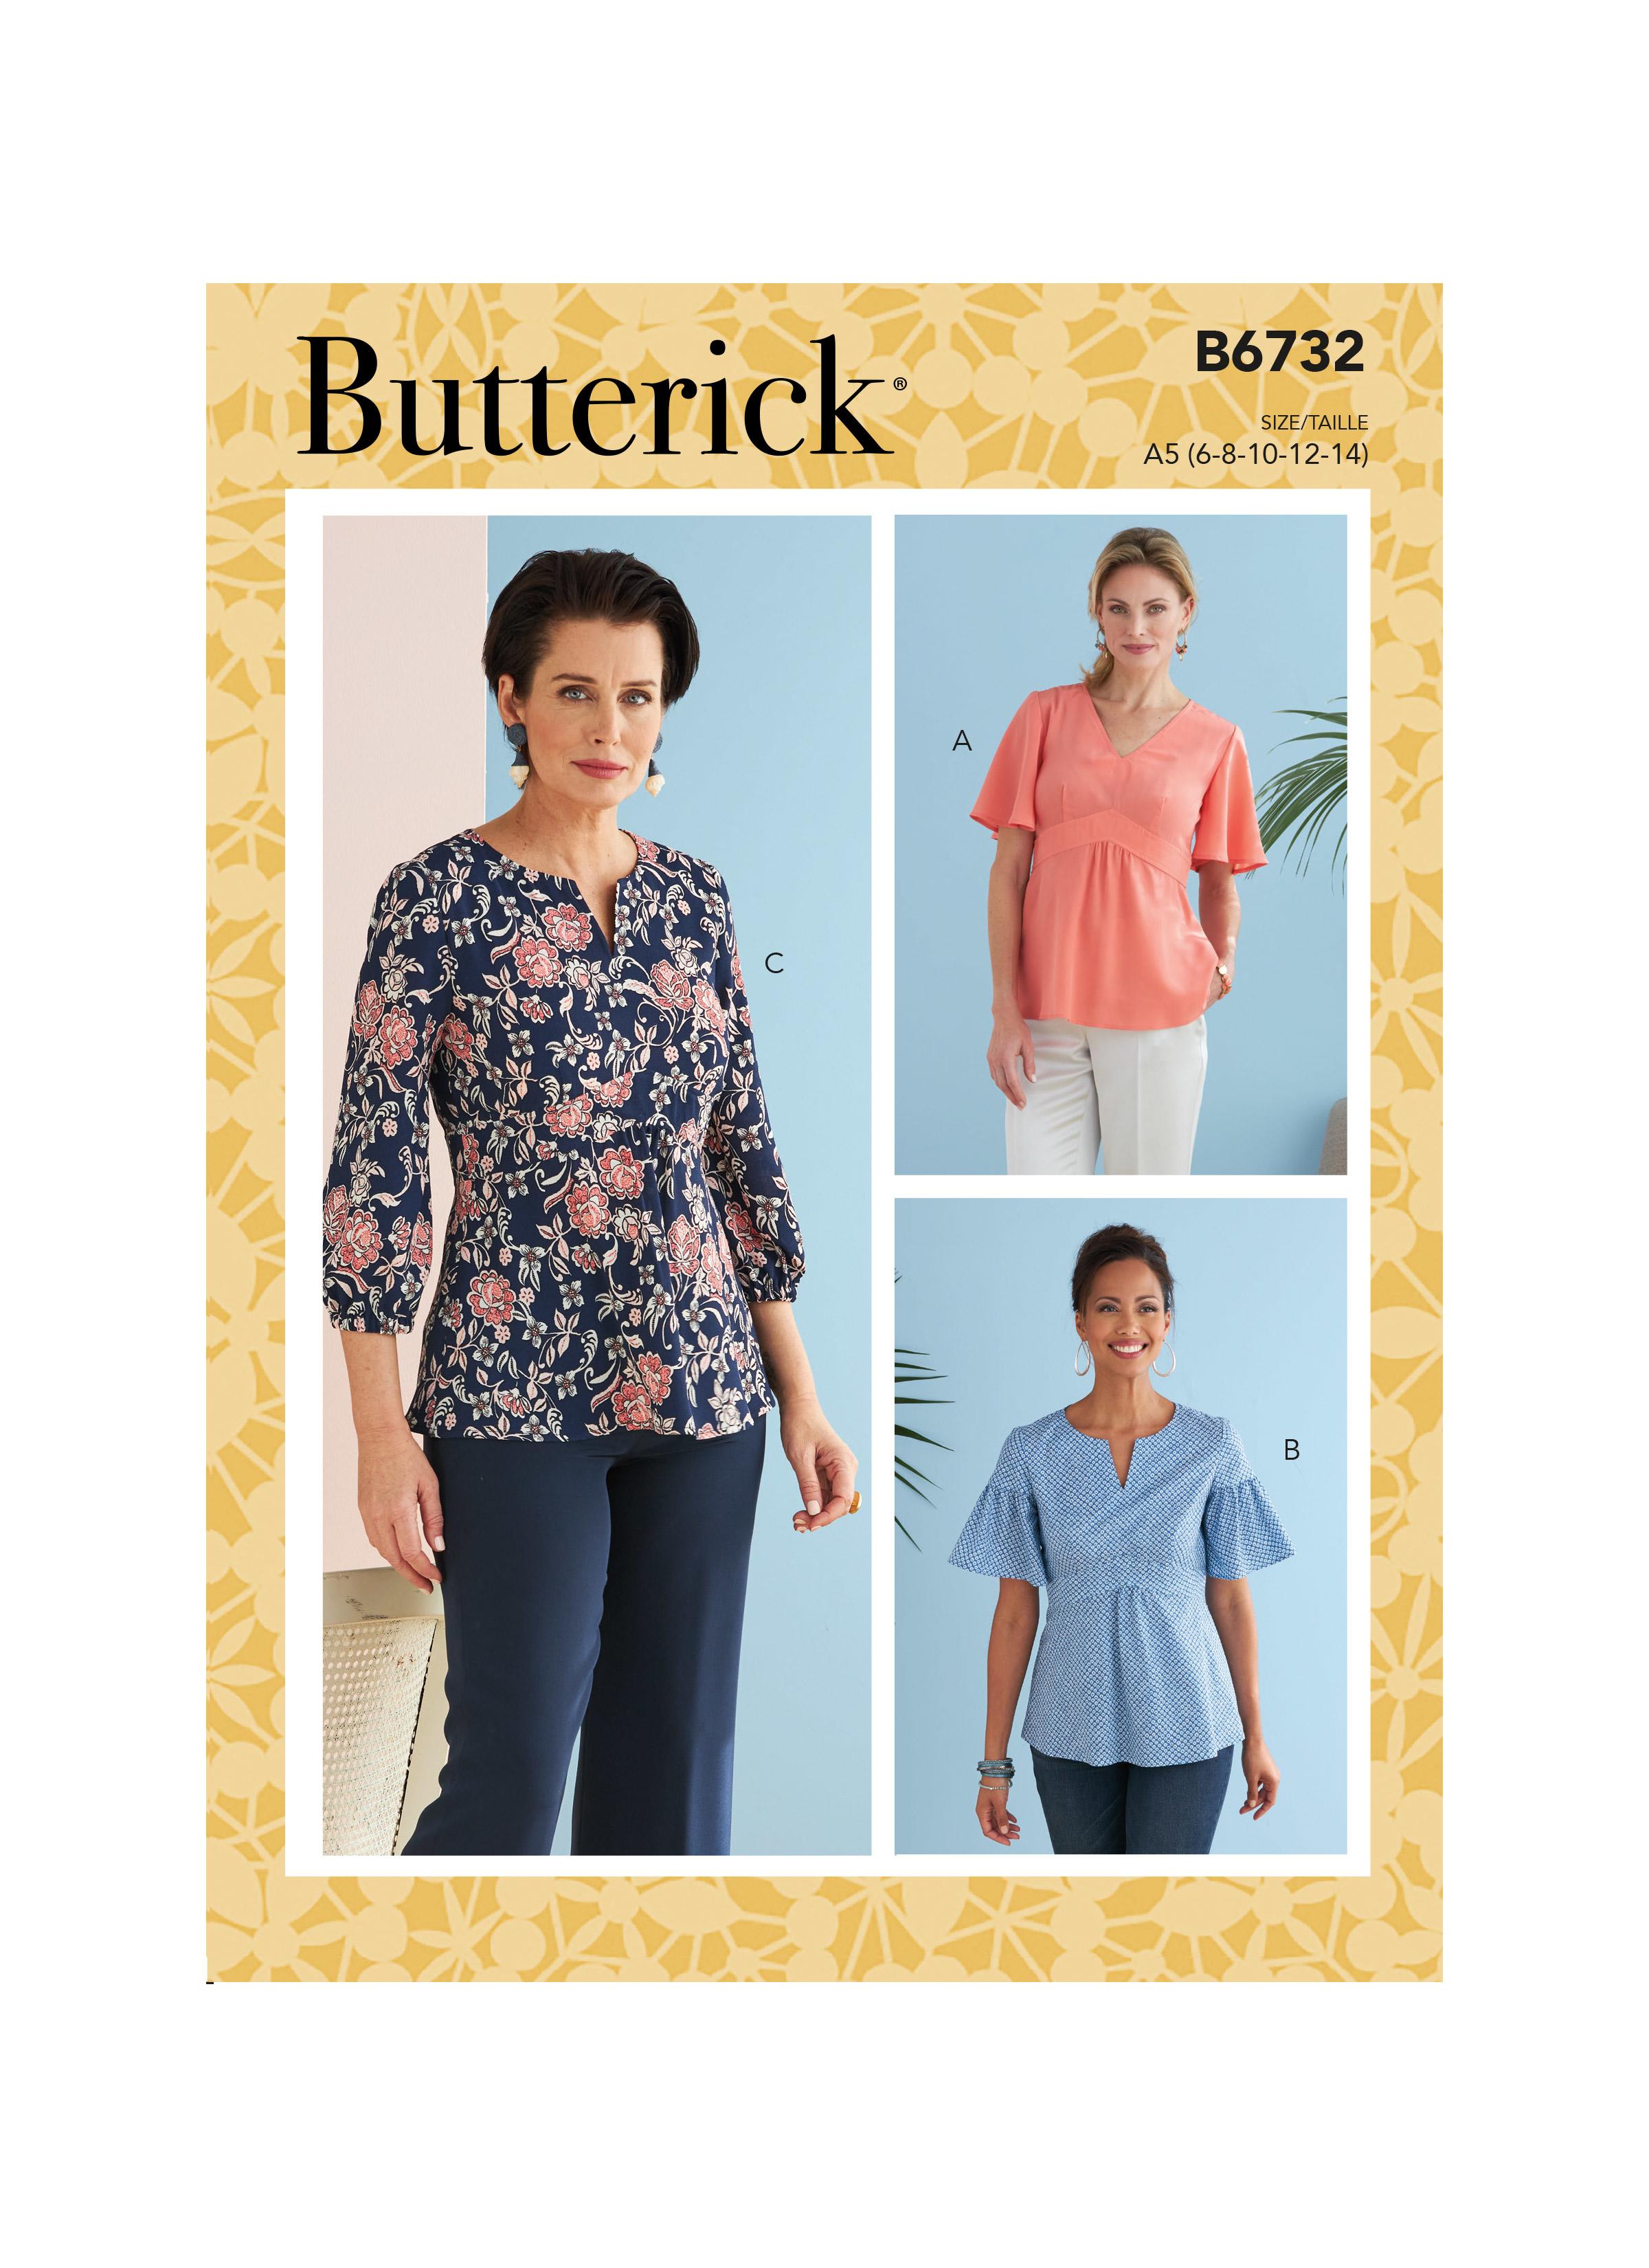 Butterick B6732 Misses' Top